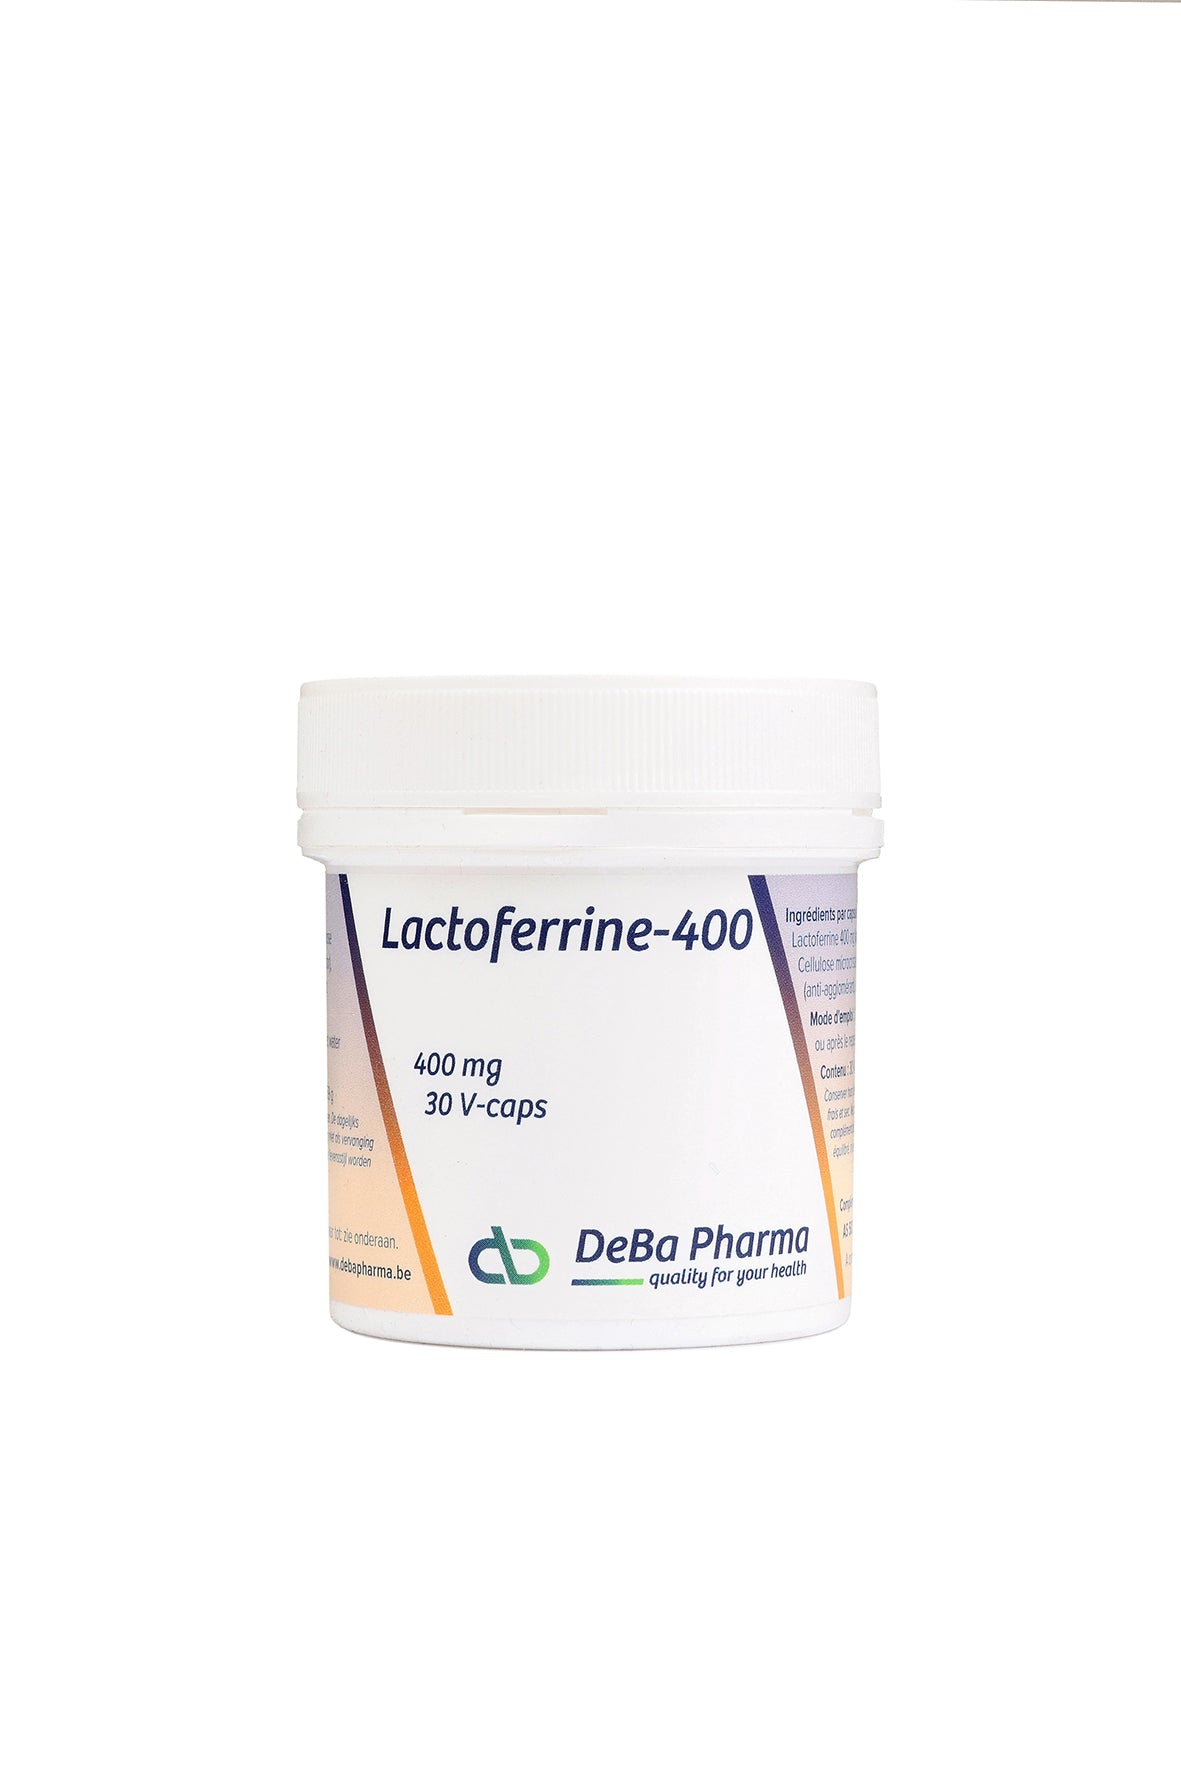 DeBa Pharma - Lactoferrine 400